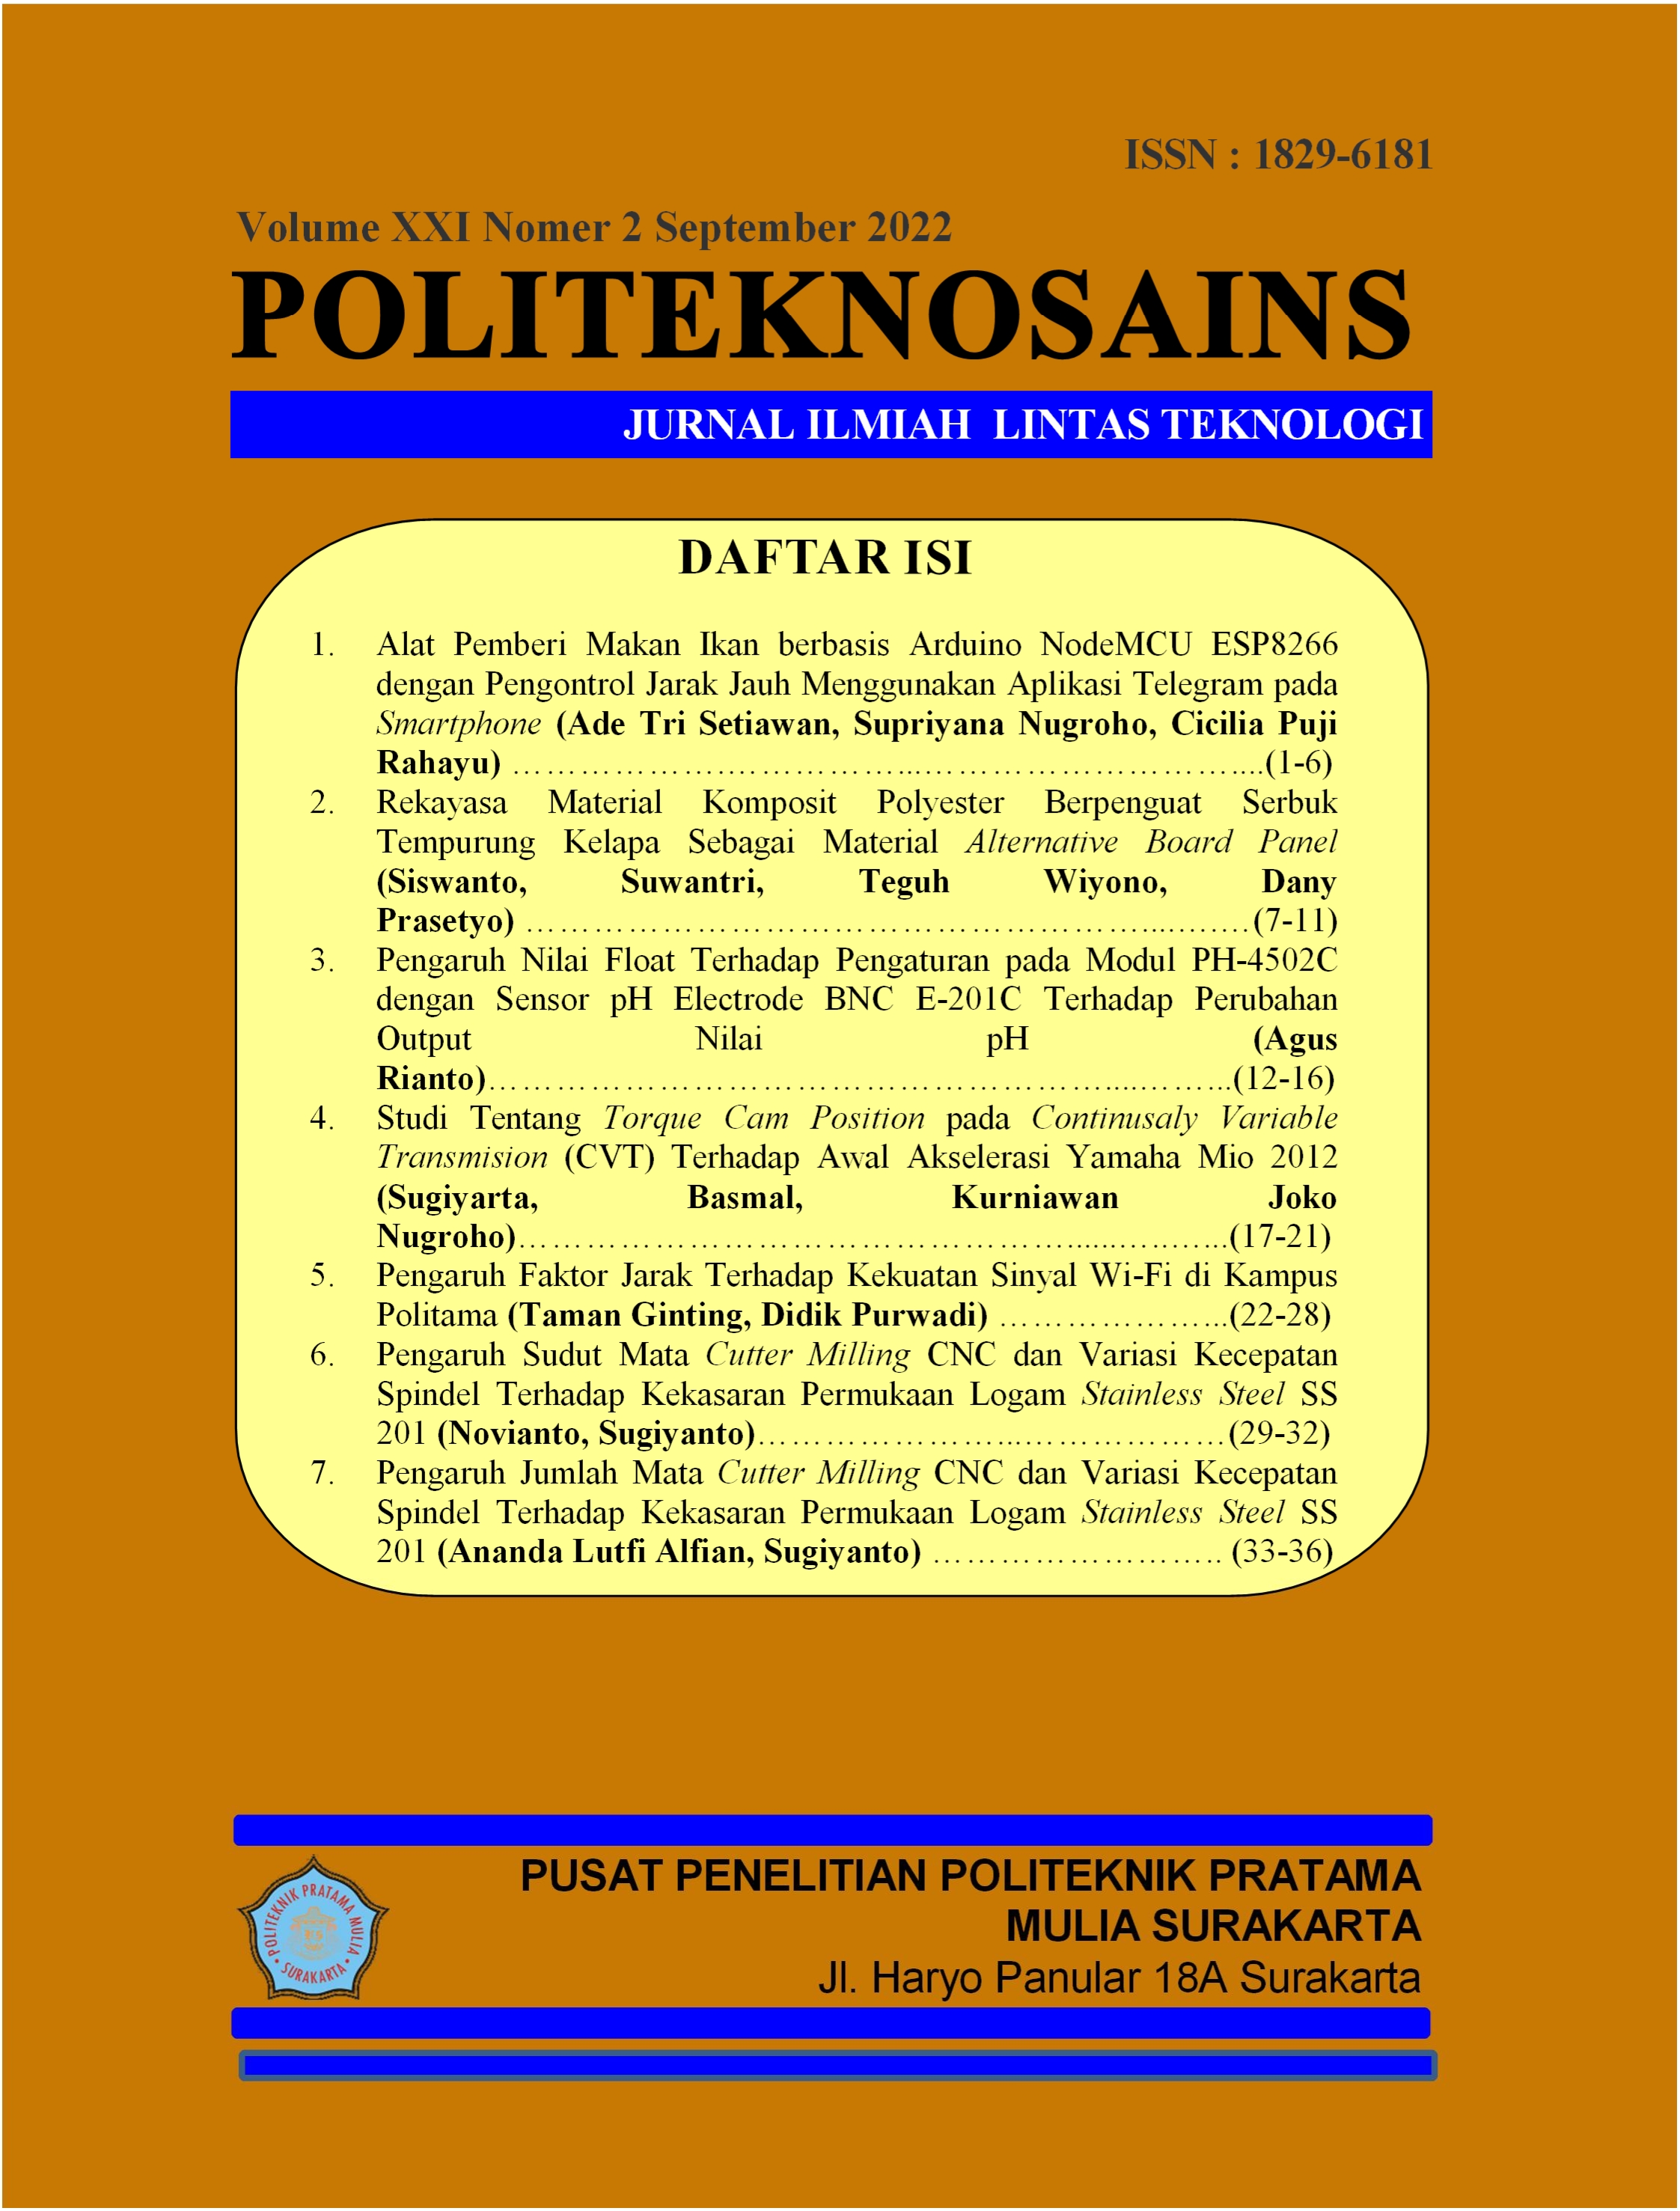 					Lihat Vol 21 No 2 (2022): Jurnal Politeknosains Volume 21 Nomor 2 - September 2022
				